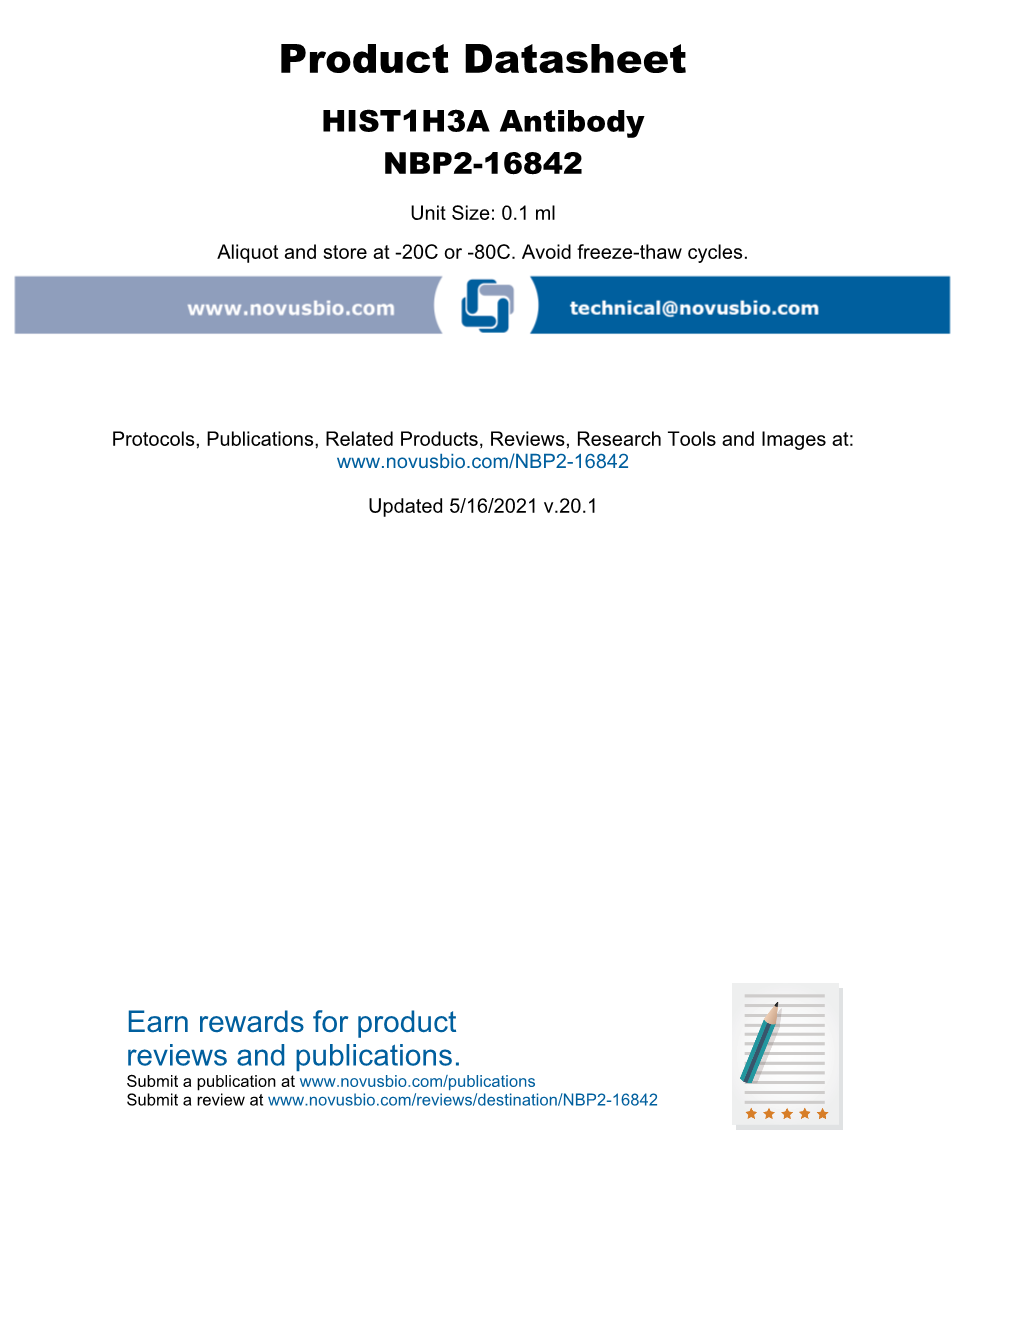 Product Datasheet HIST1H3A Antibody NBP2-16842